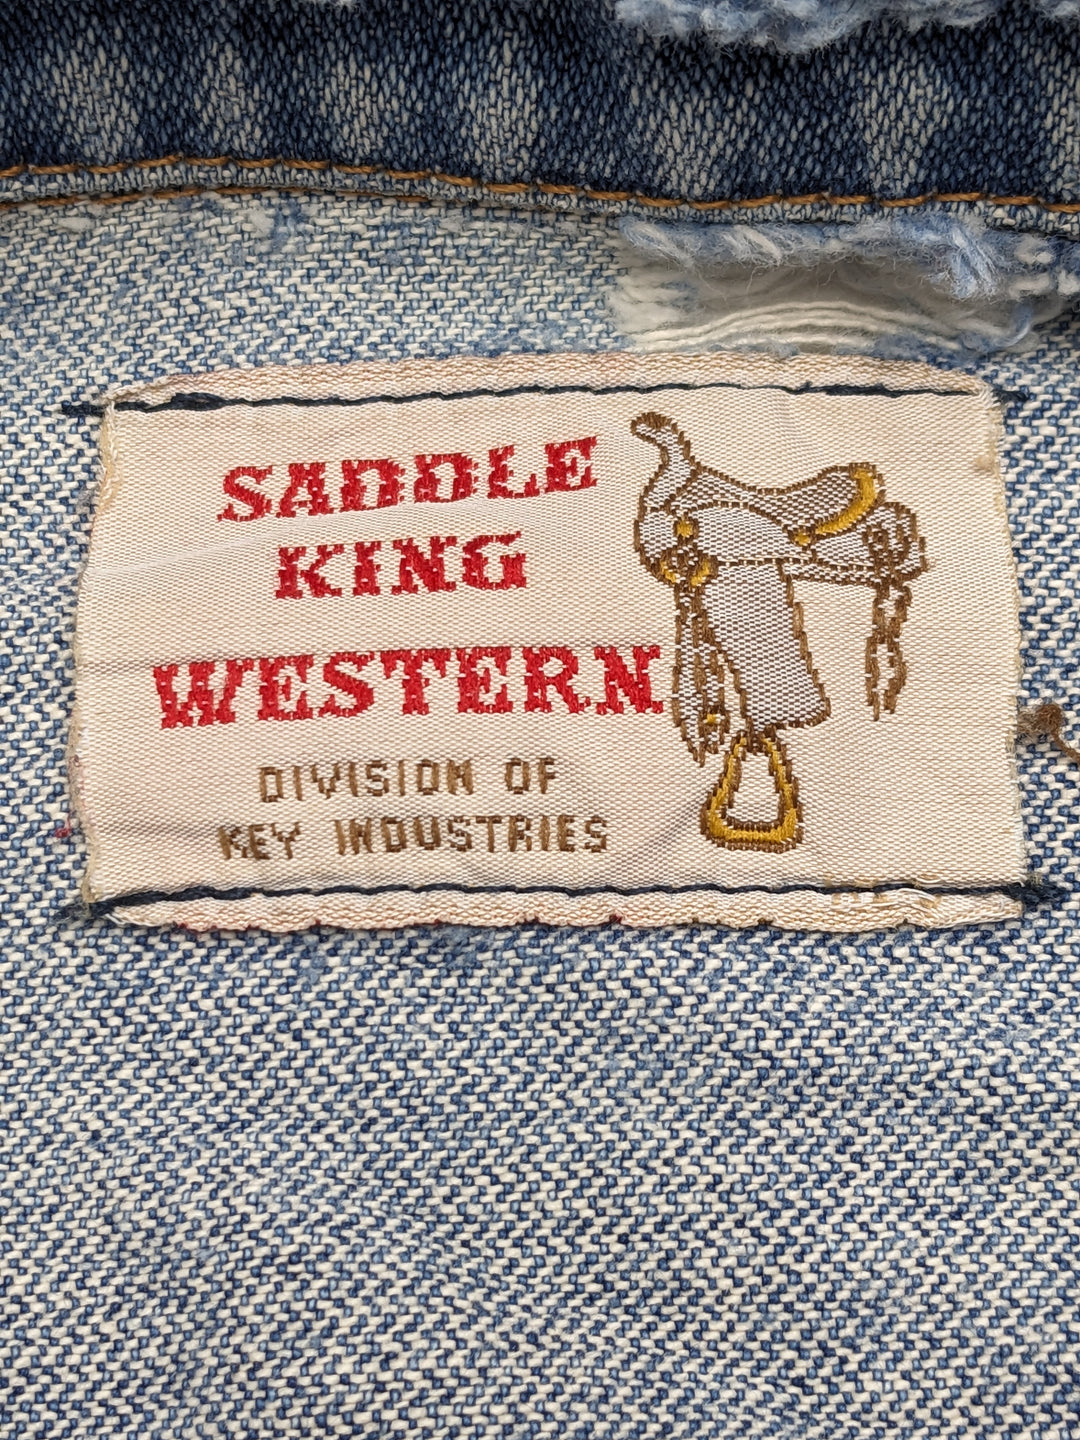 Saddle King Western Jacket 1 pc 3 lbs C0422206-05